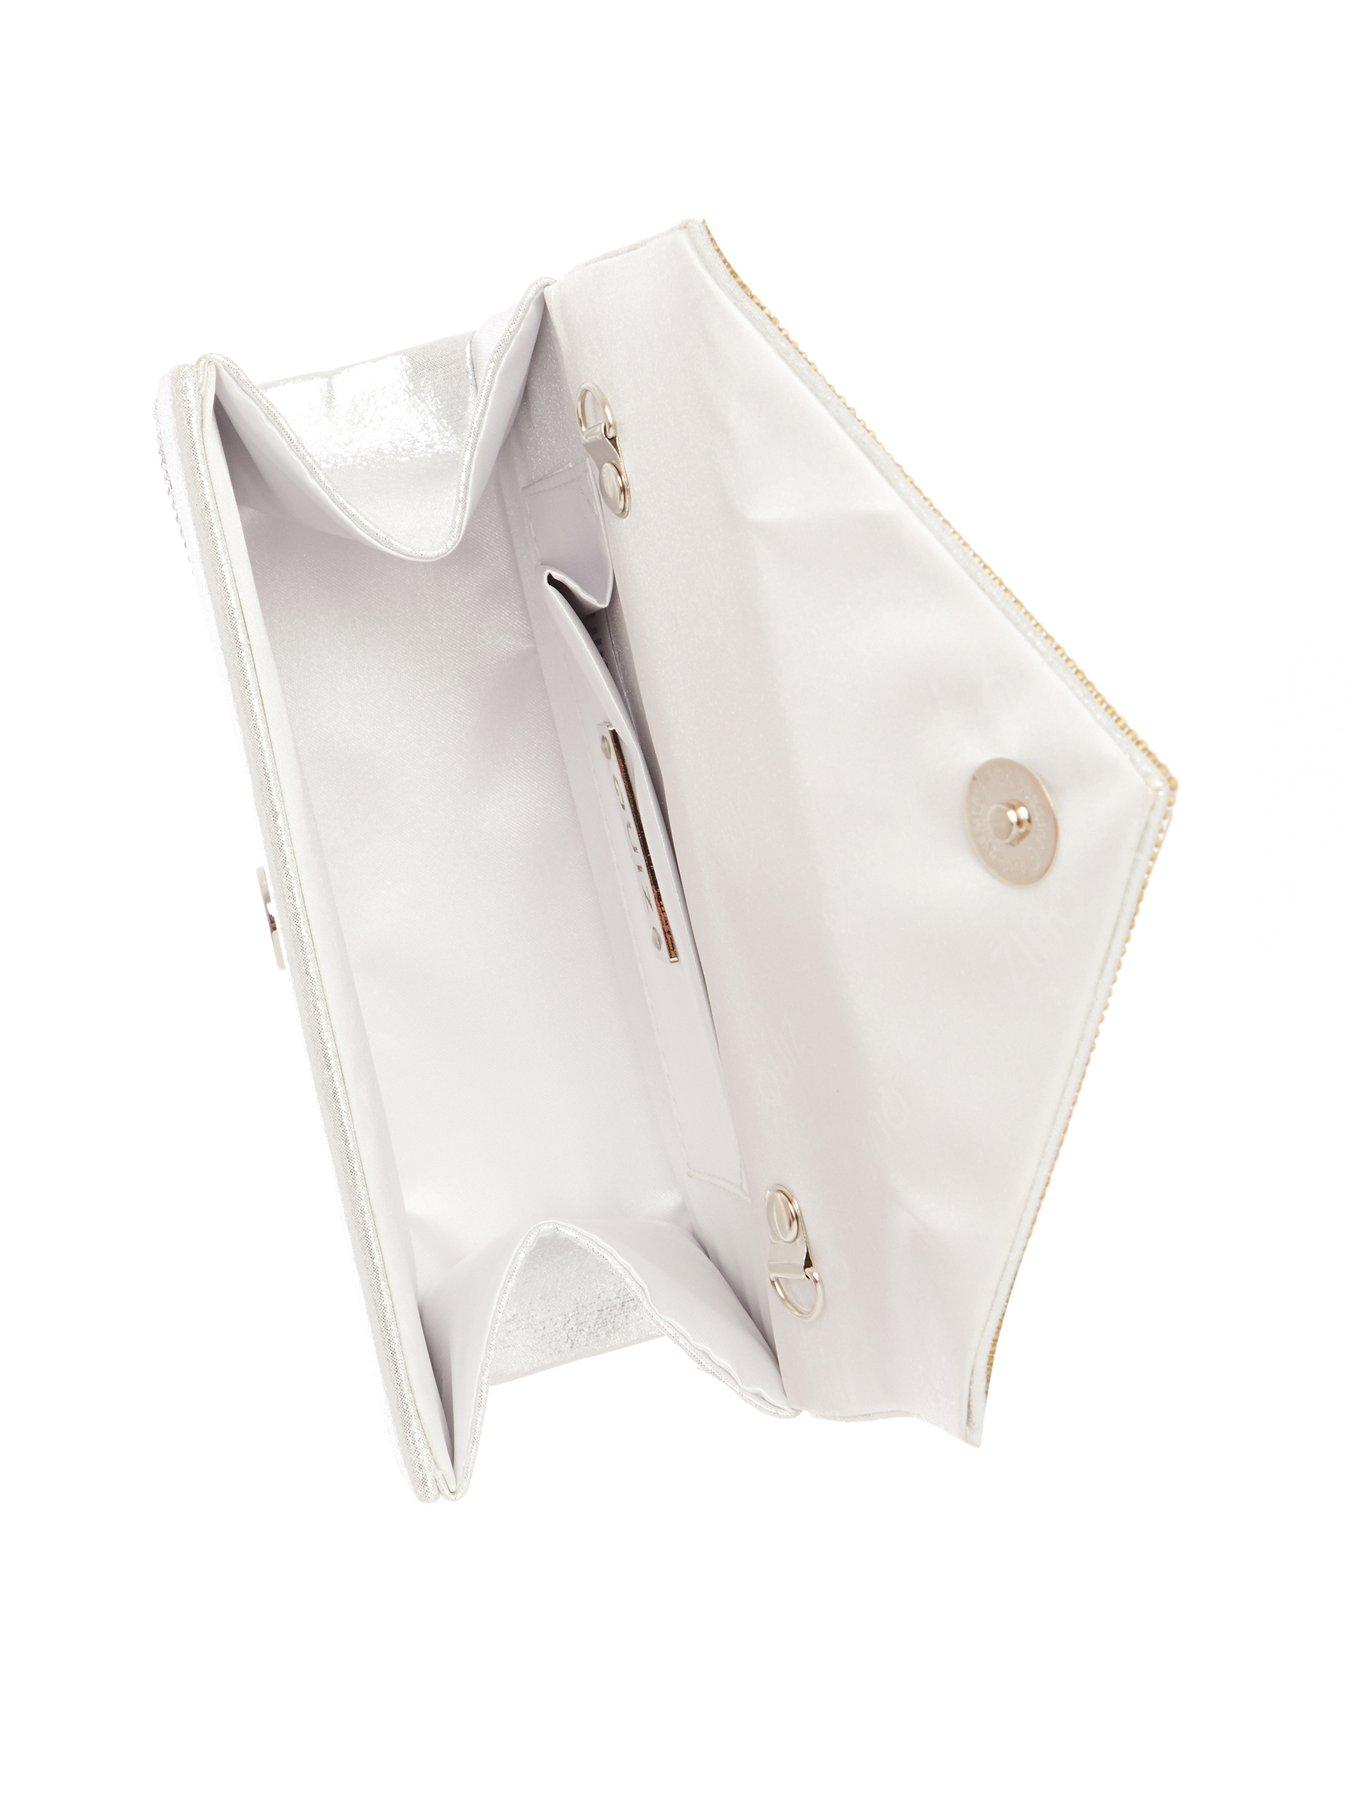 Bags & Purses Diamante Clutch Bag - Bright Silver